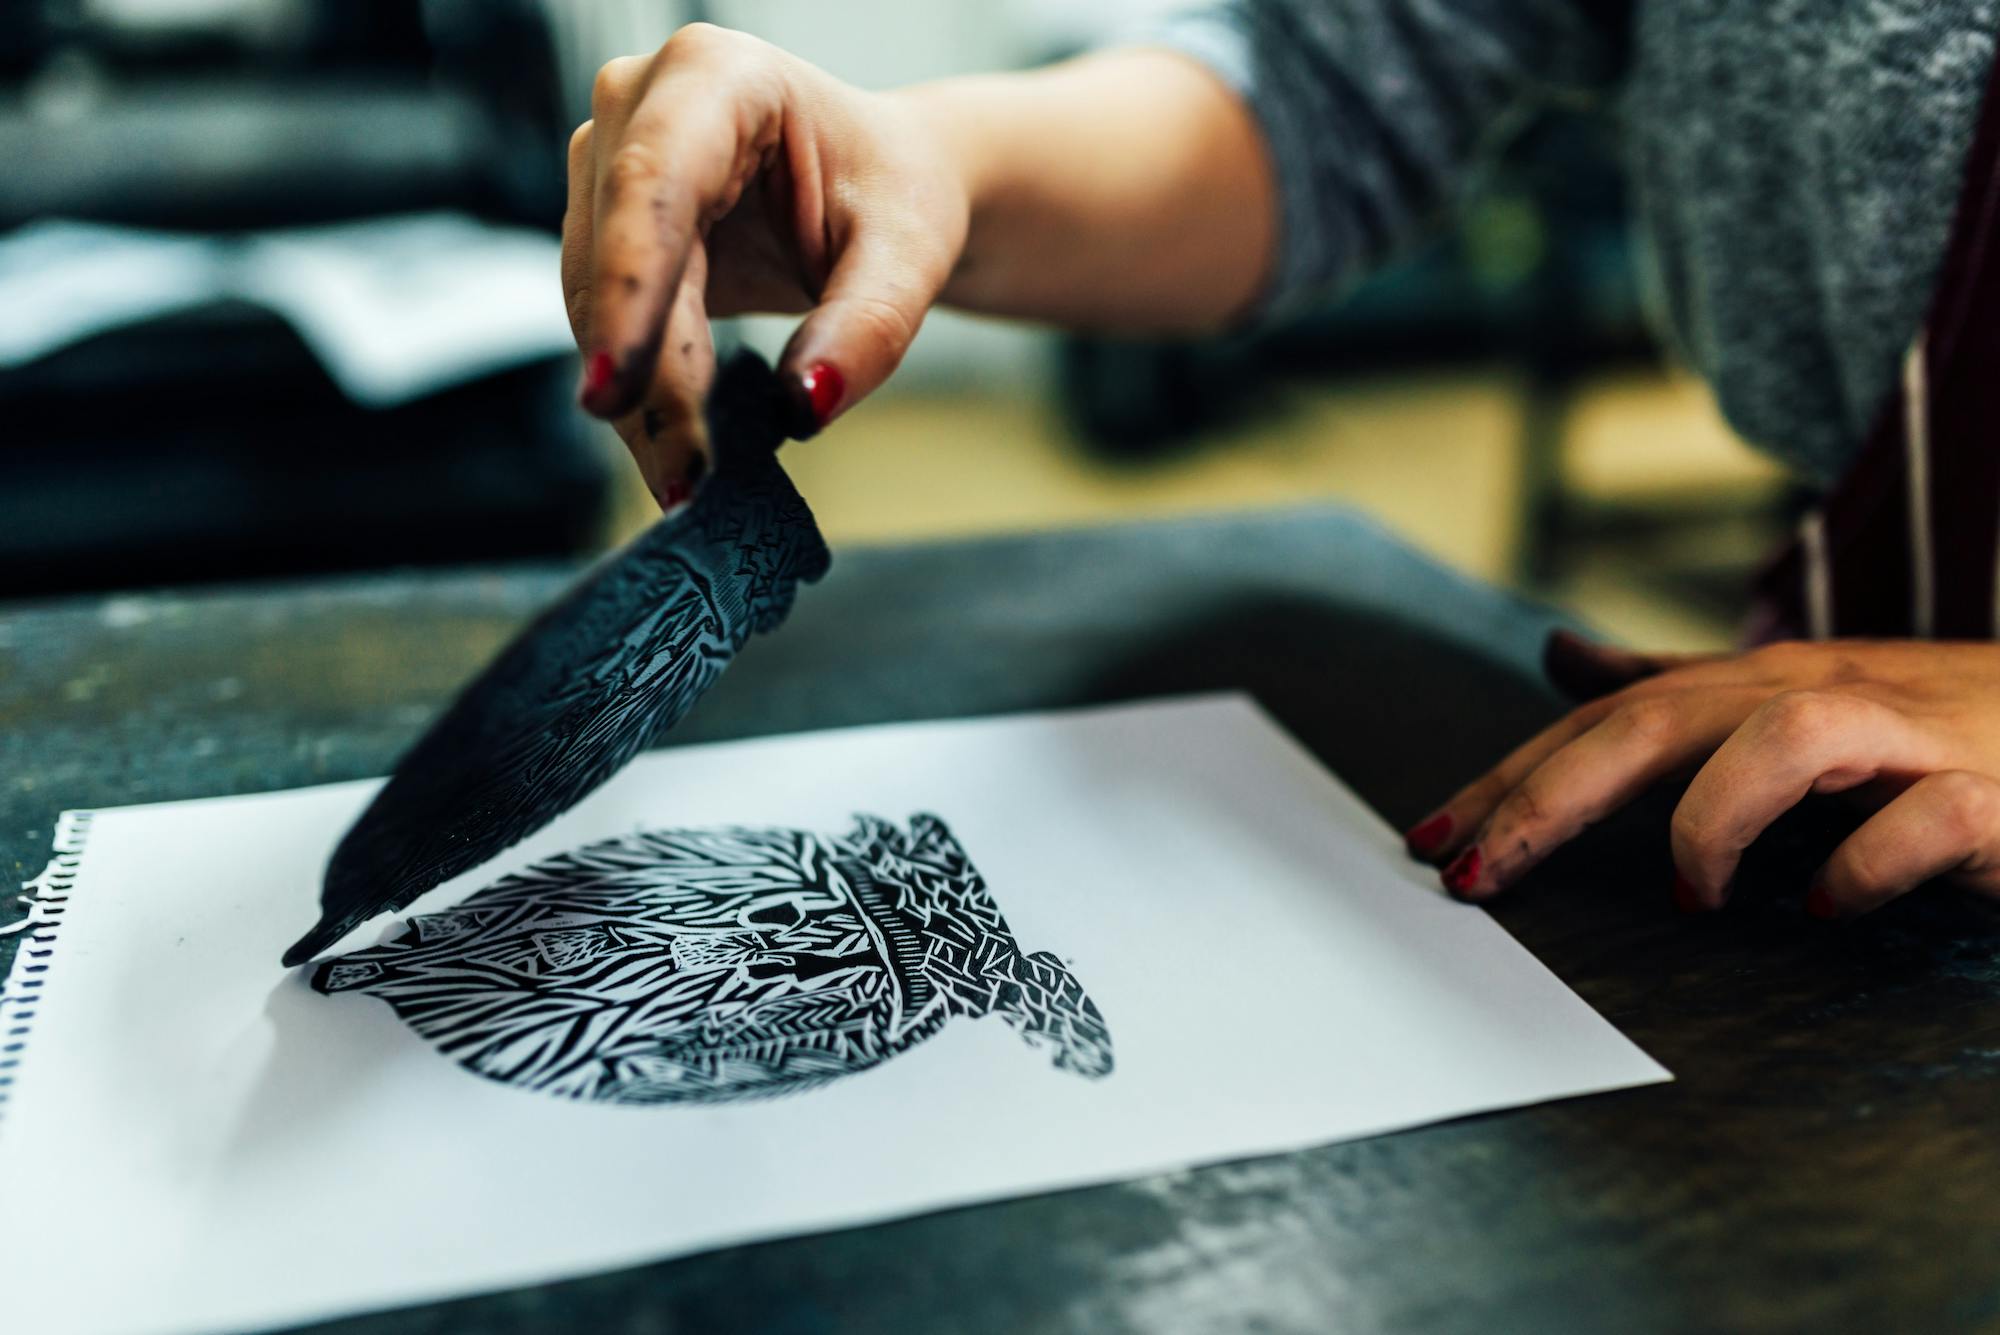 Someone showing the engraving process of printmaking.